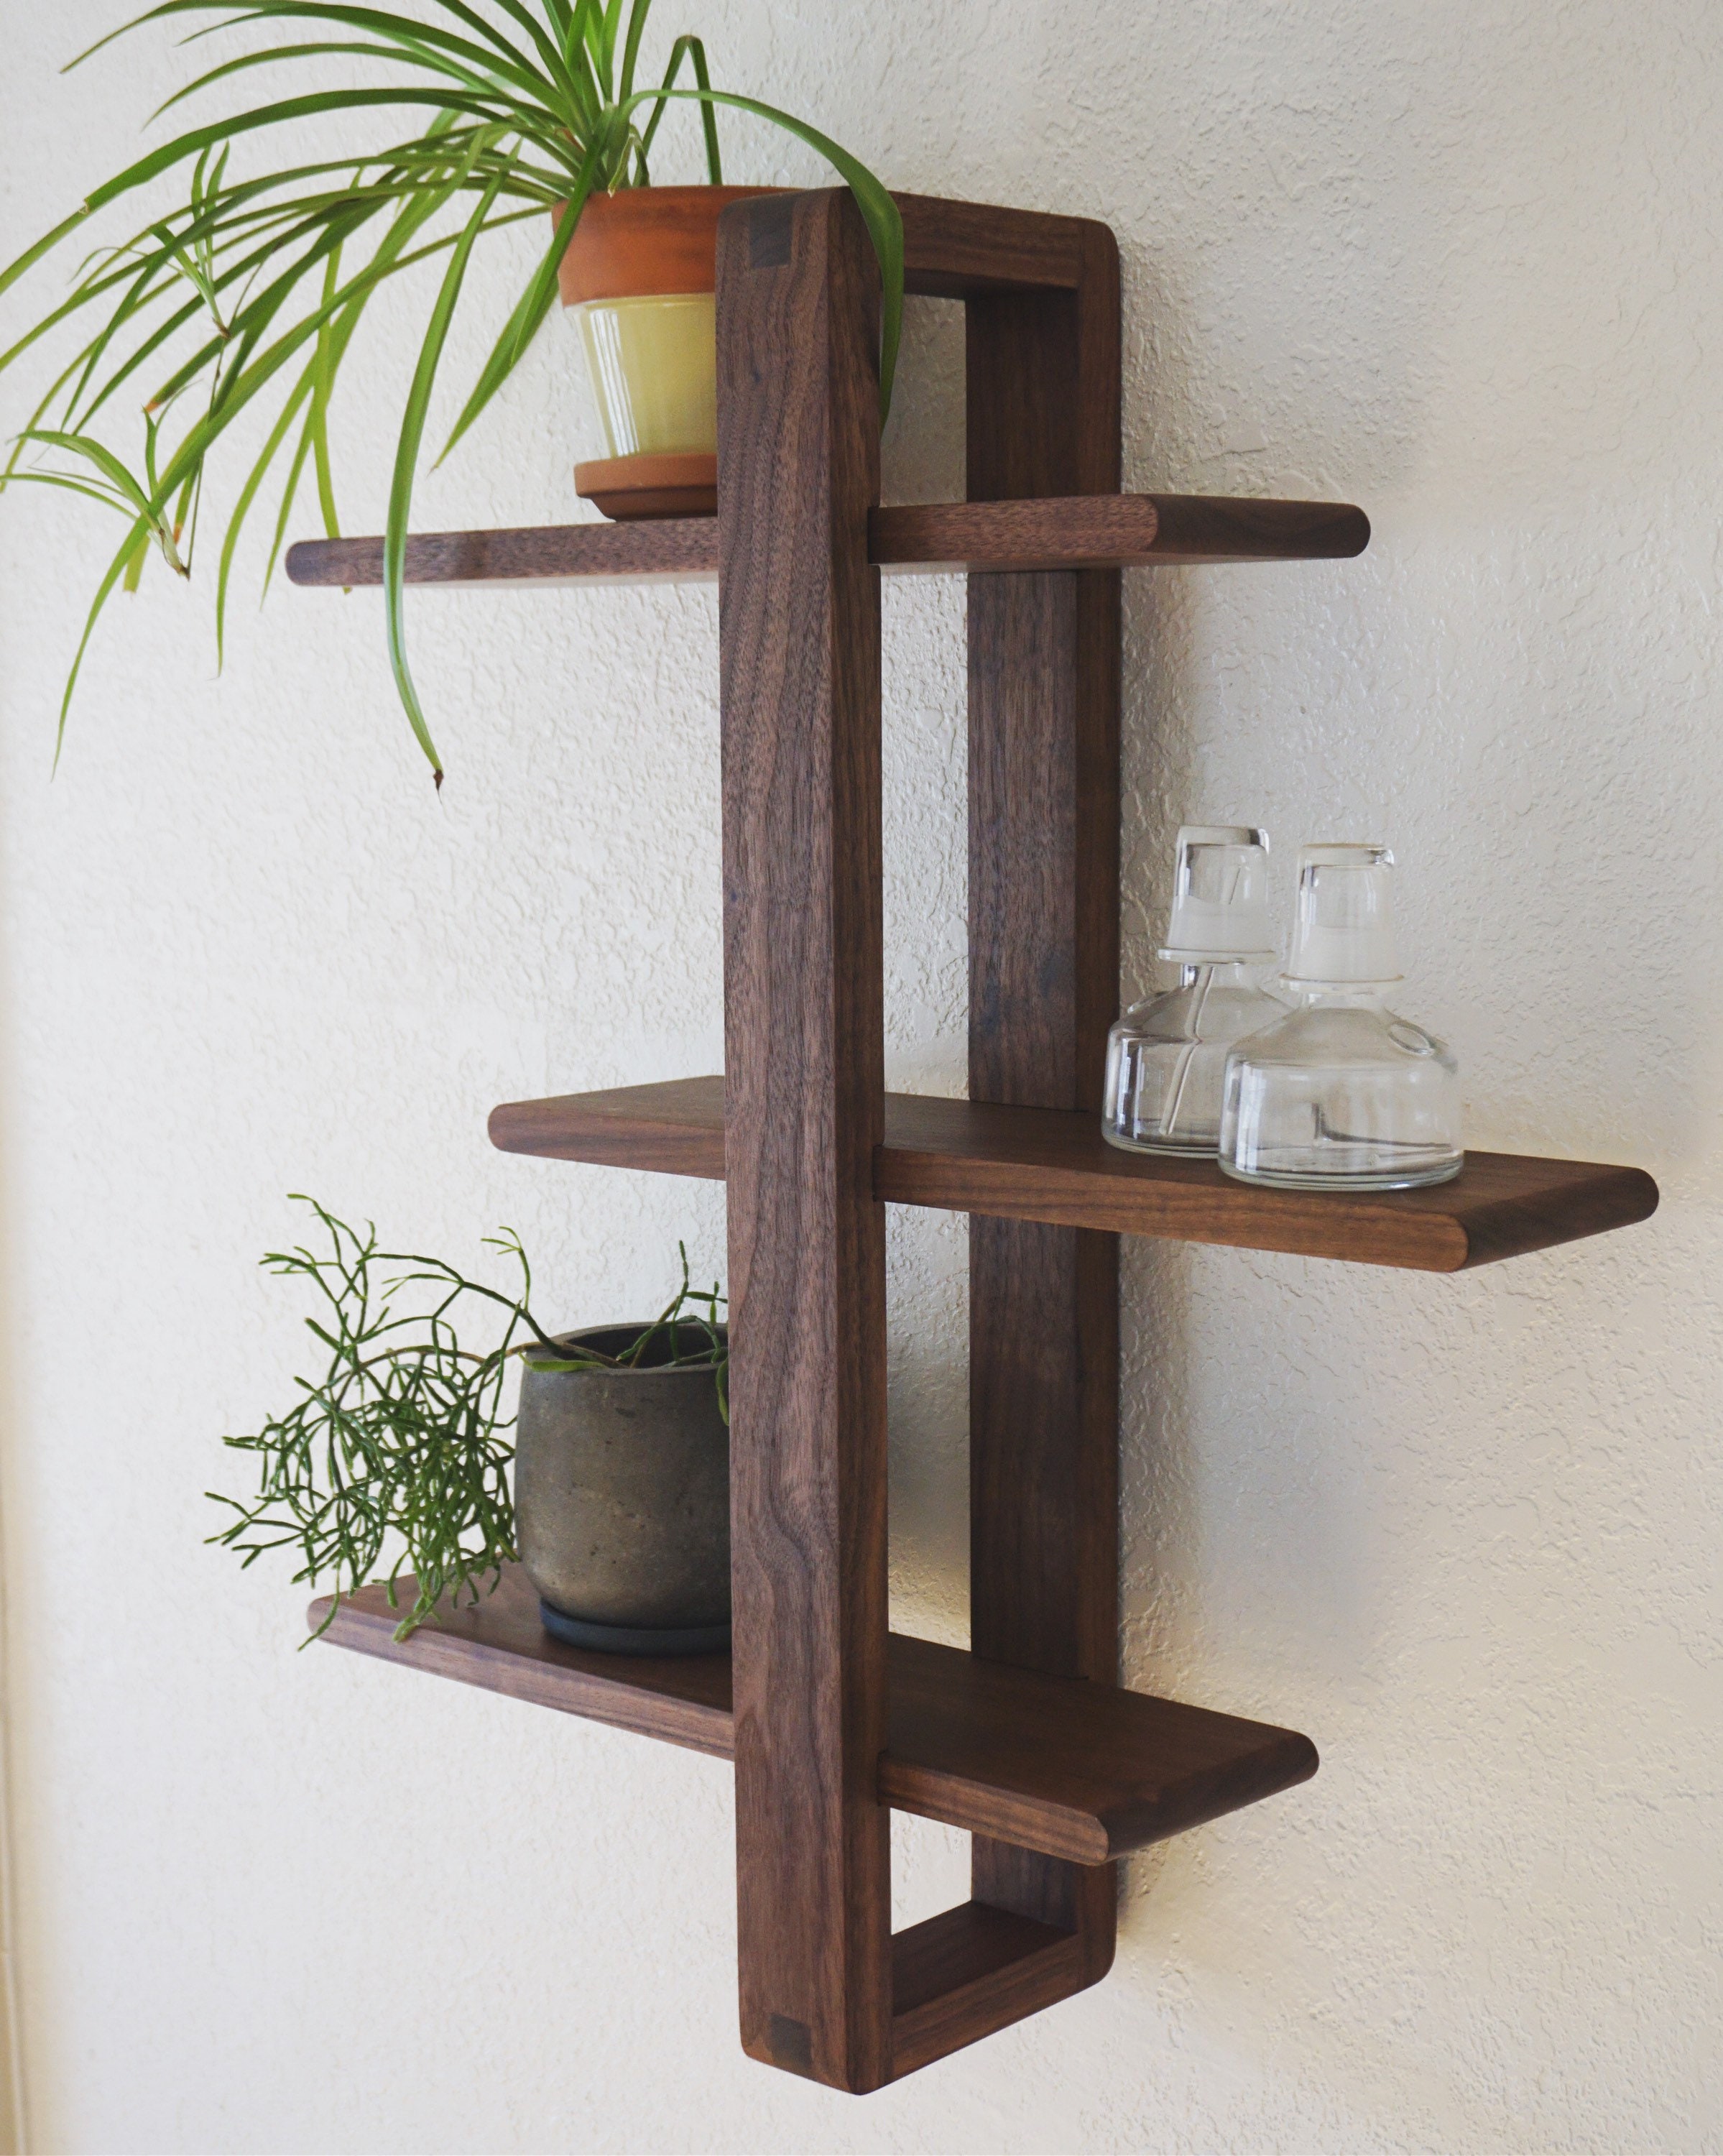 Walnut Shift Shelf the Original Solid Wood Wall Decor for Hanging